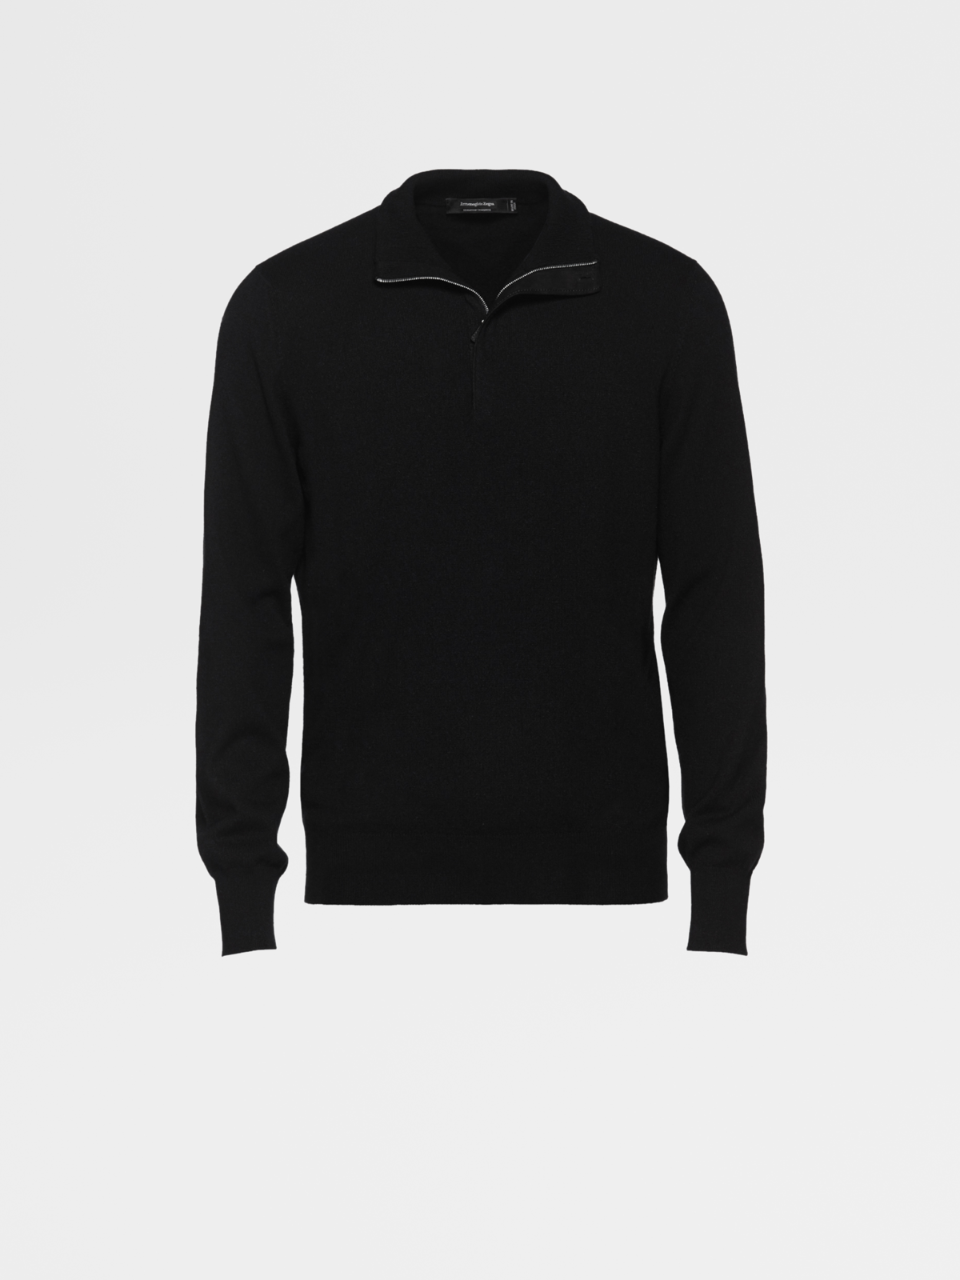 Black Premium Cashmere Knit Mock Neck Sweater